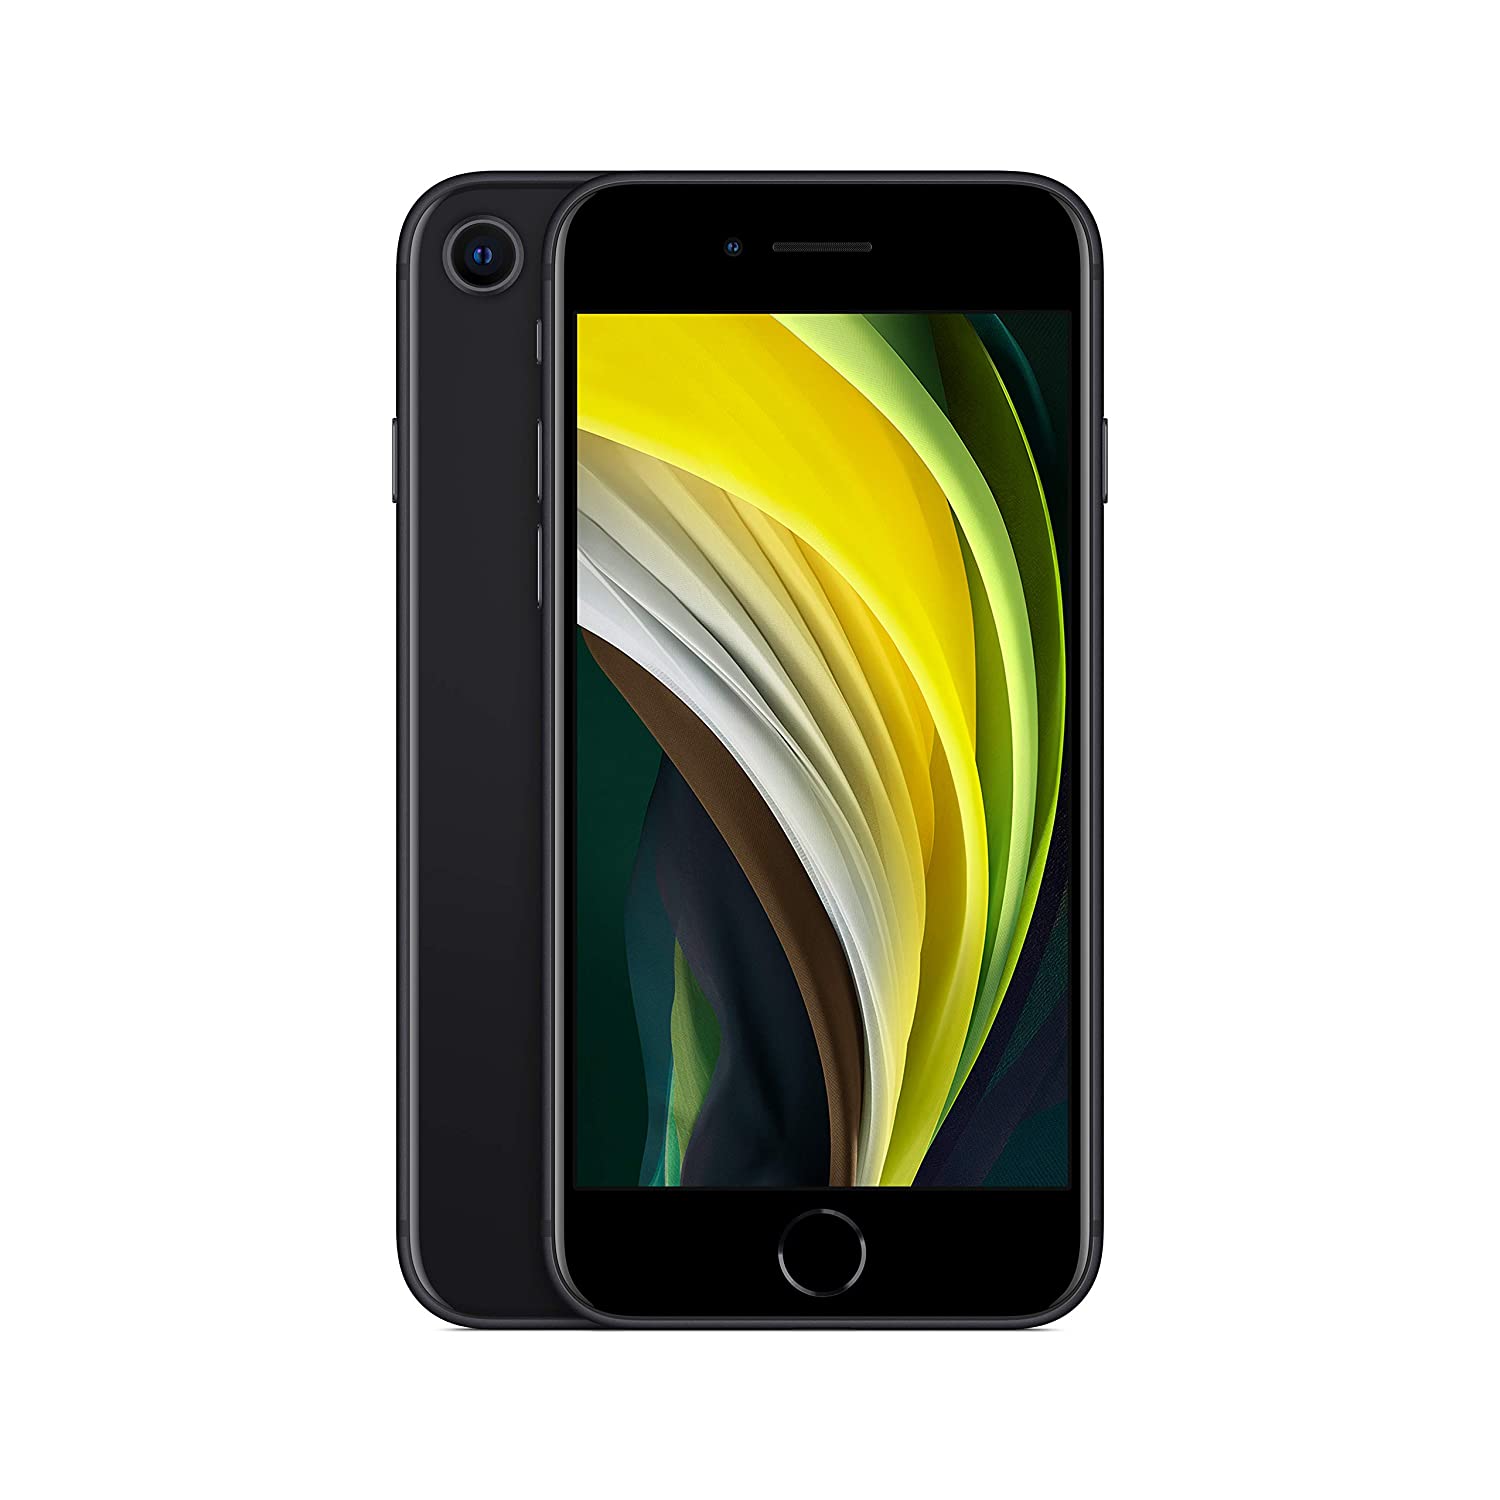 Apple iPhone SE (64GB) - Black